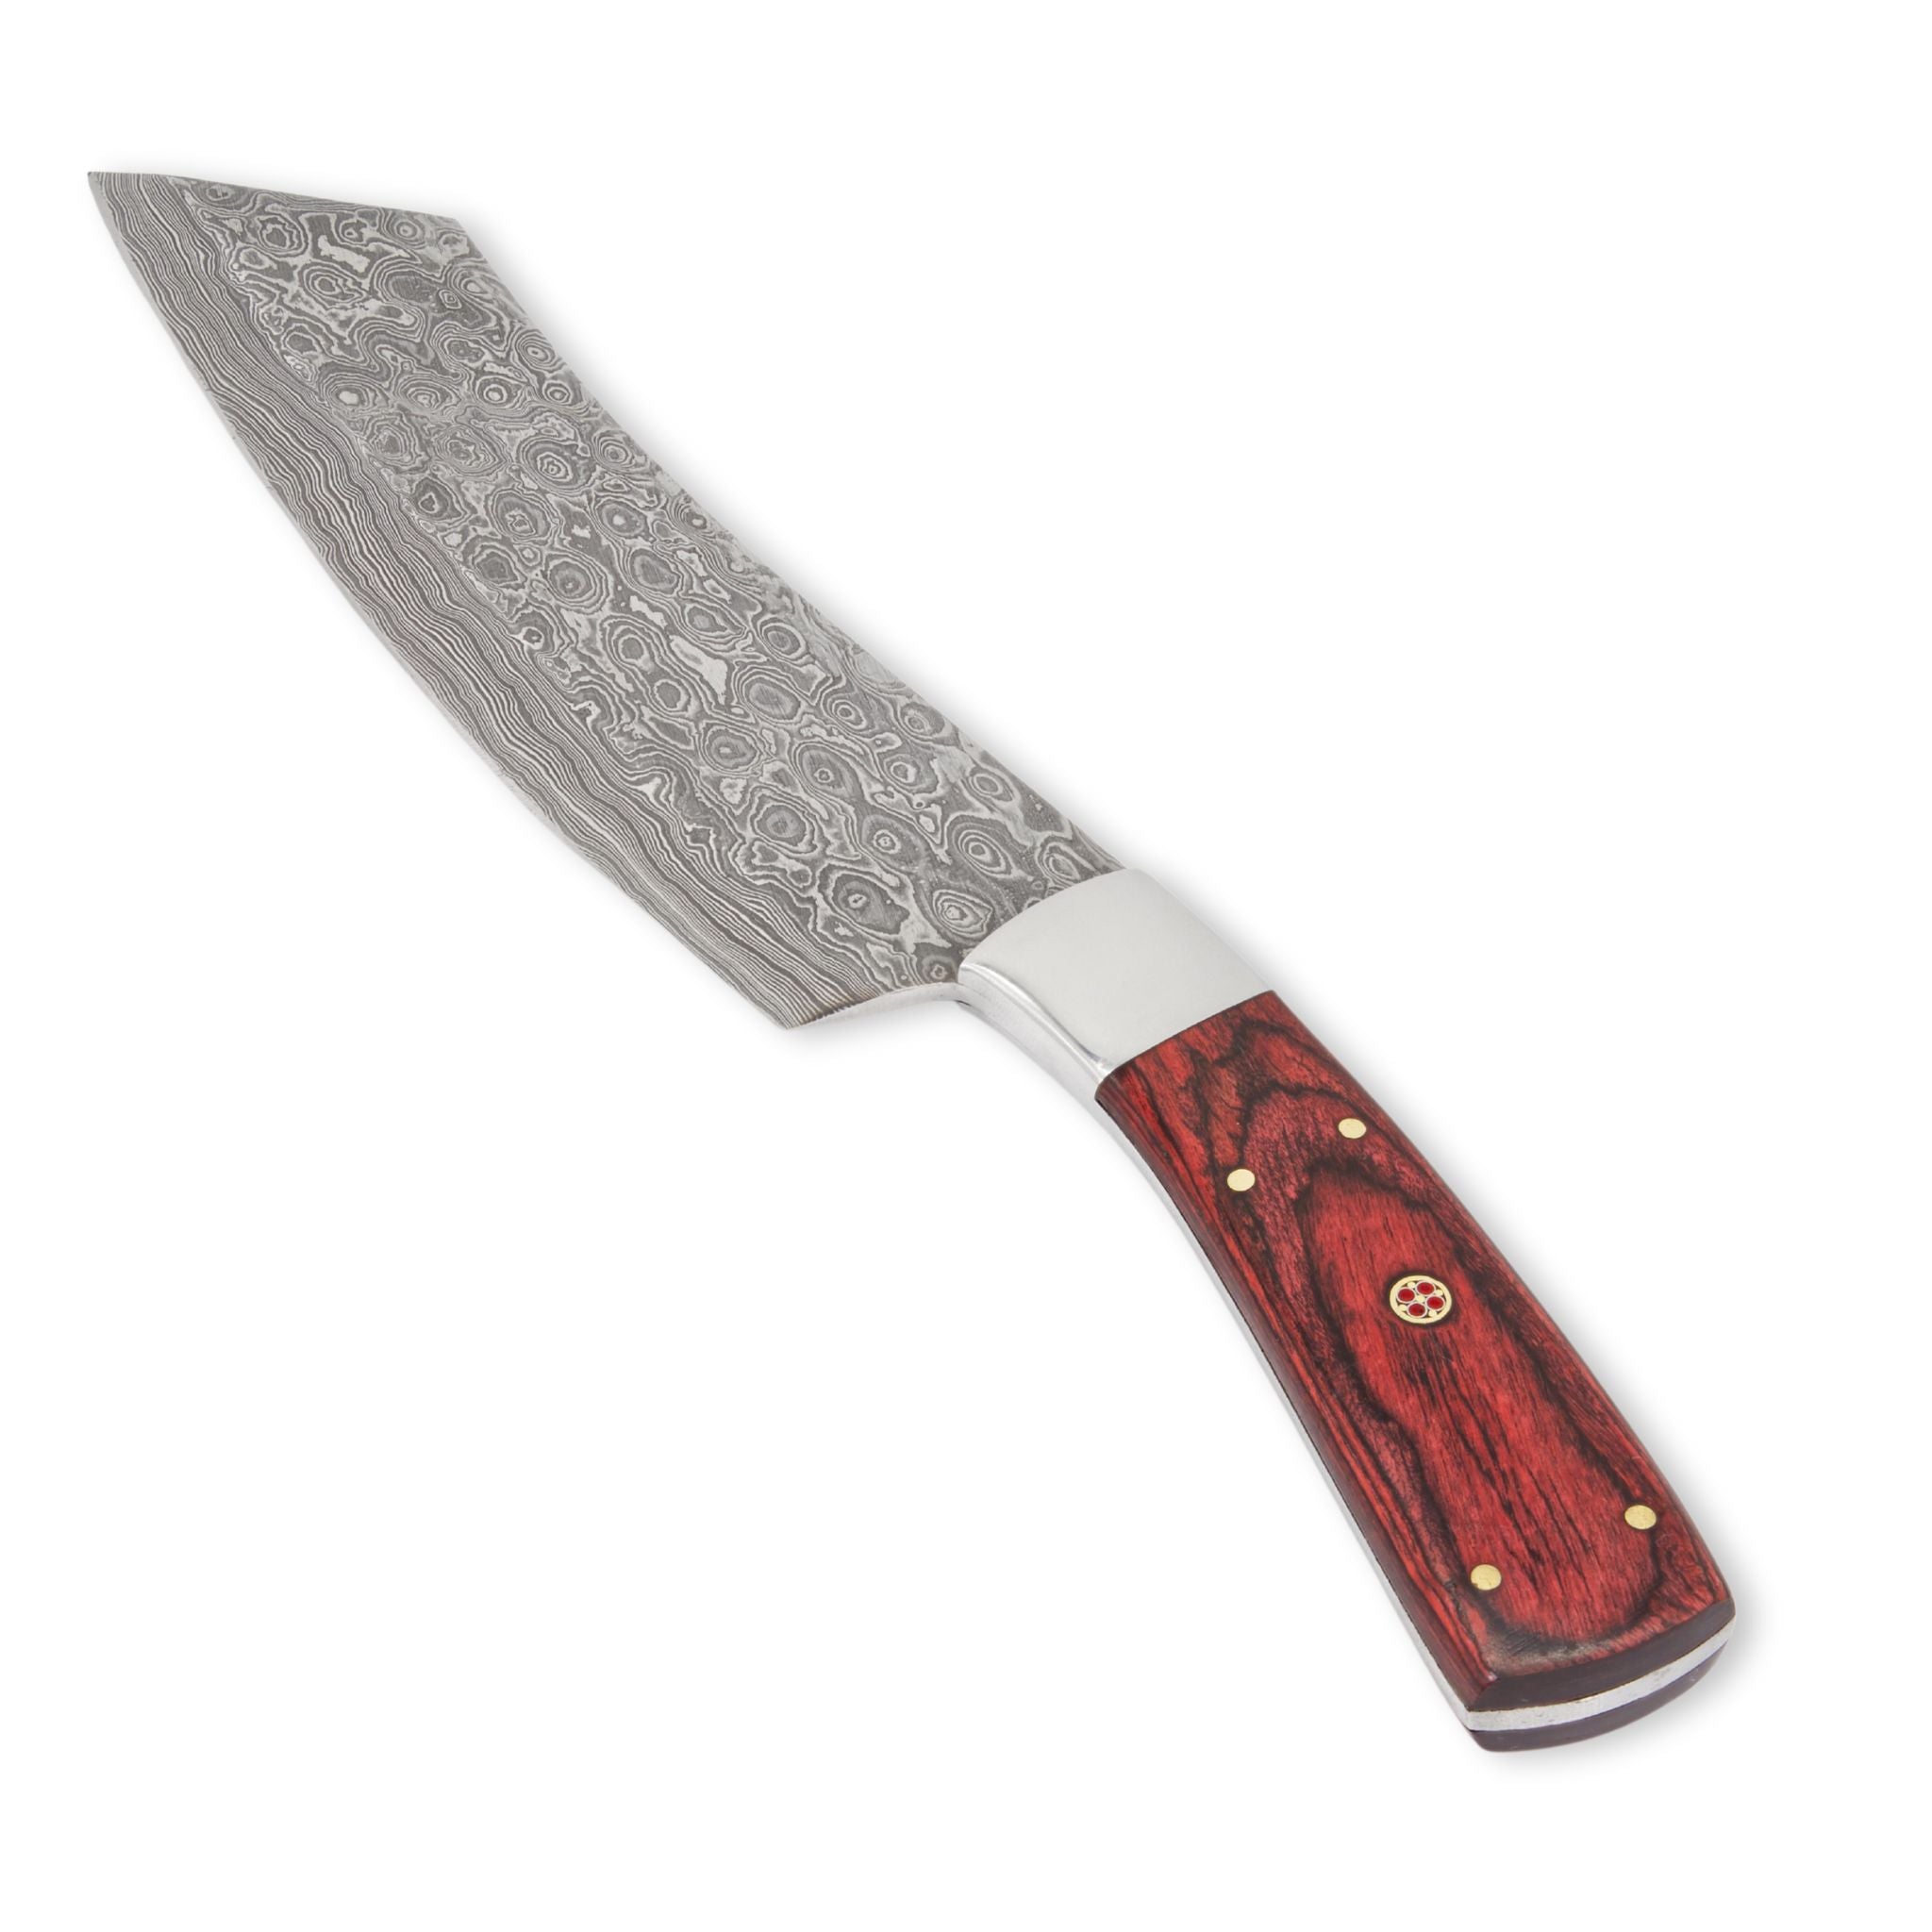 Chop Keen I, Handmade Chef's Knife